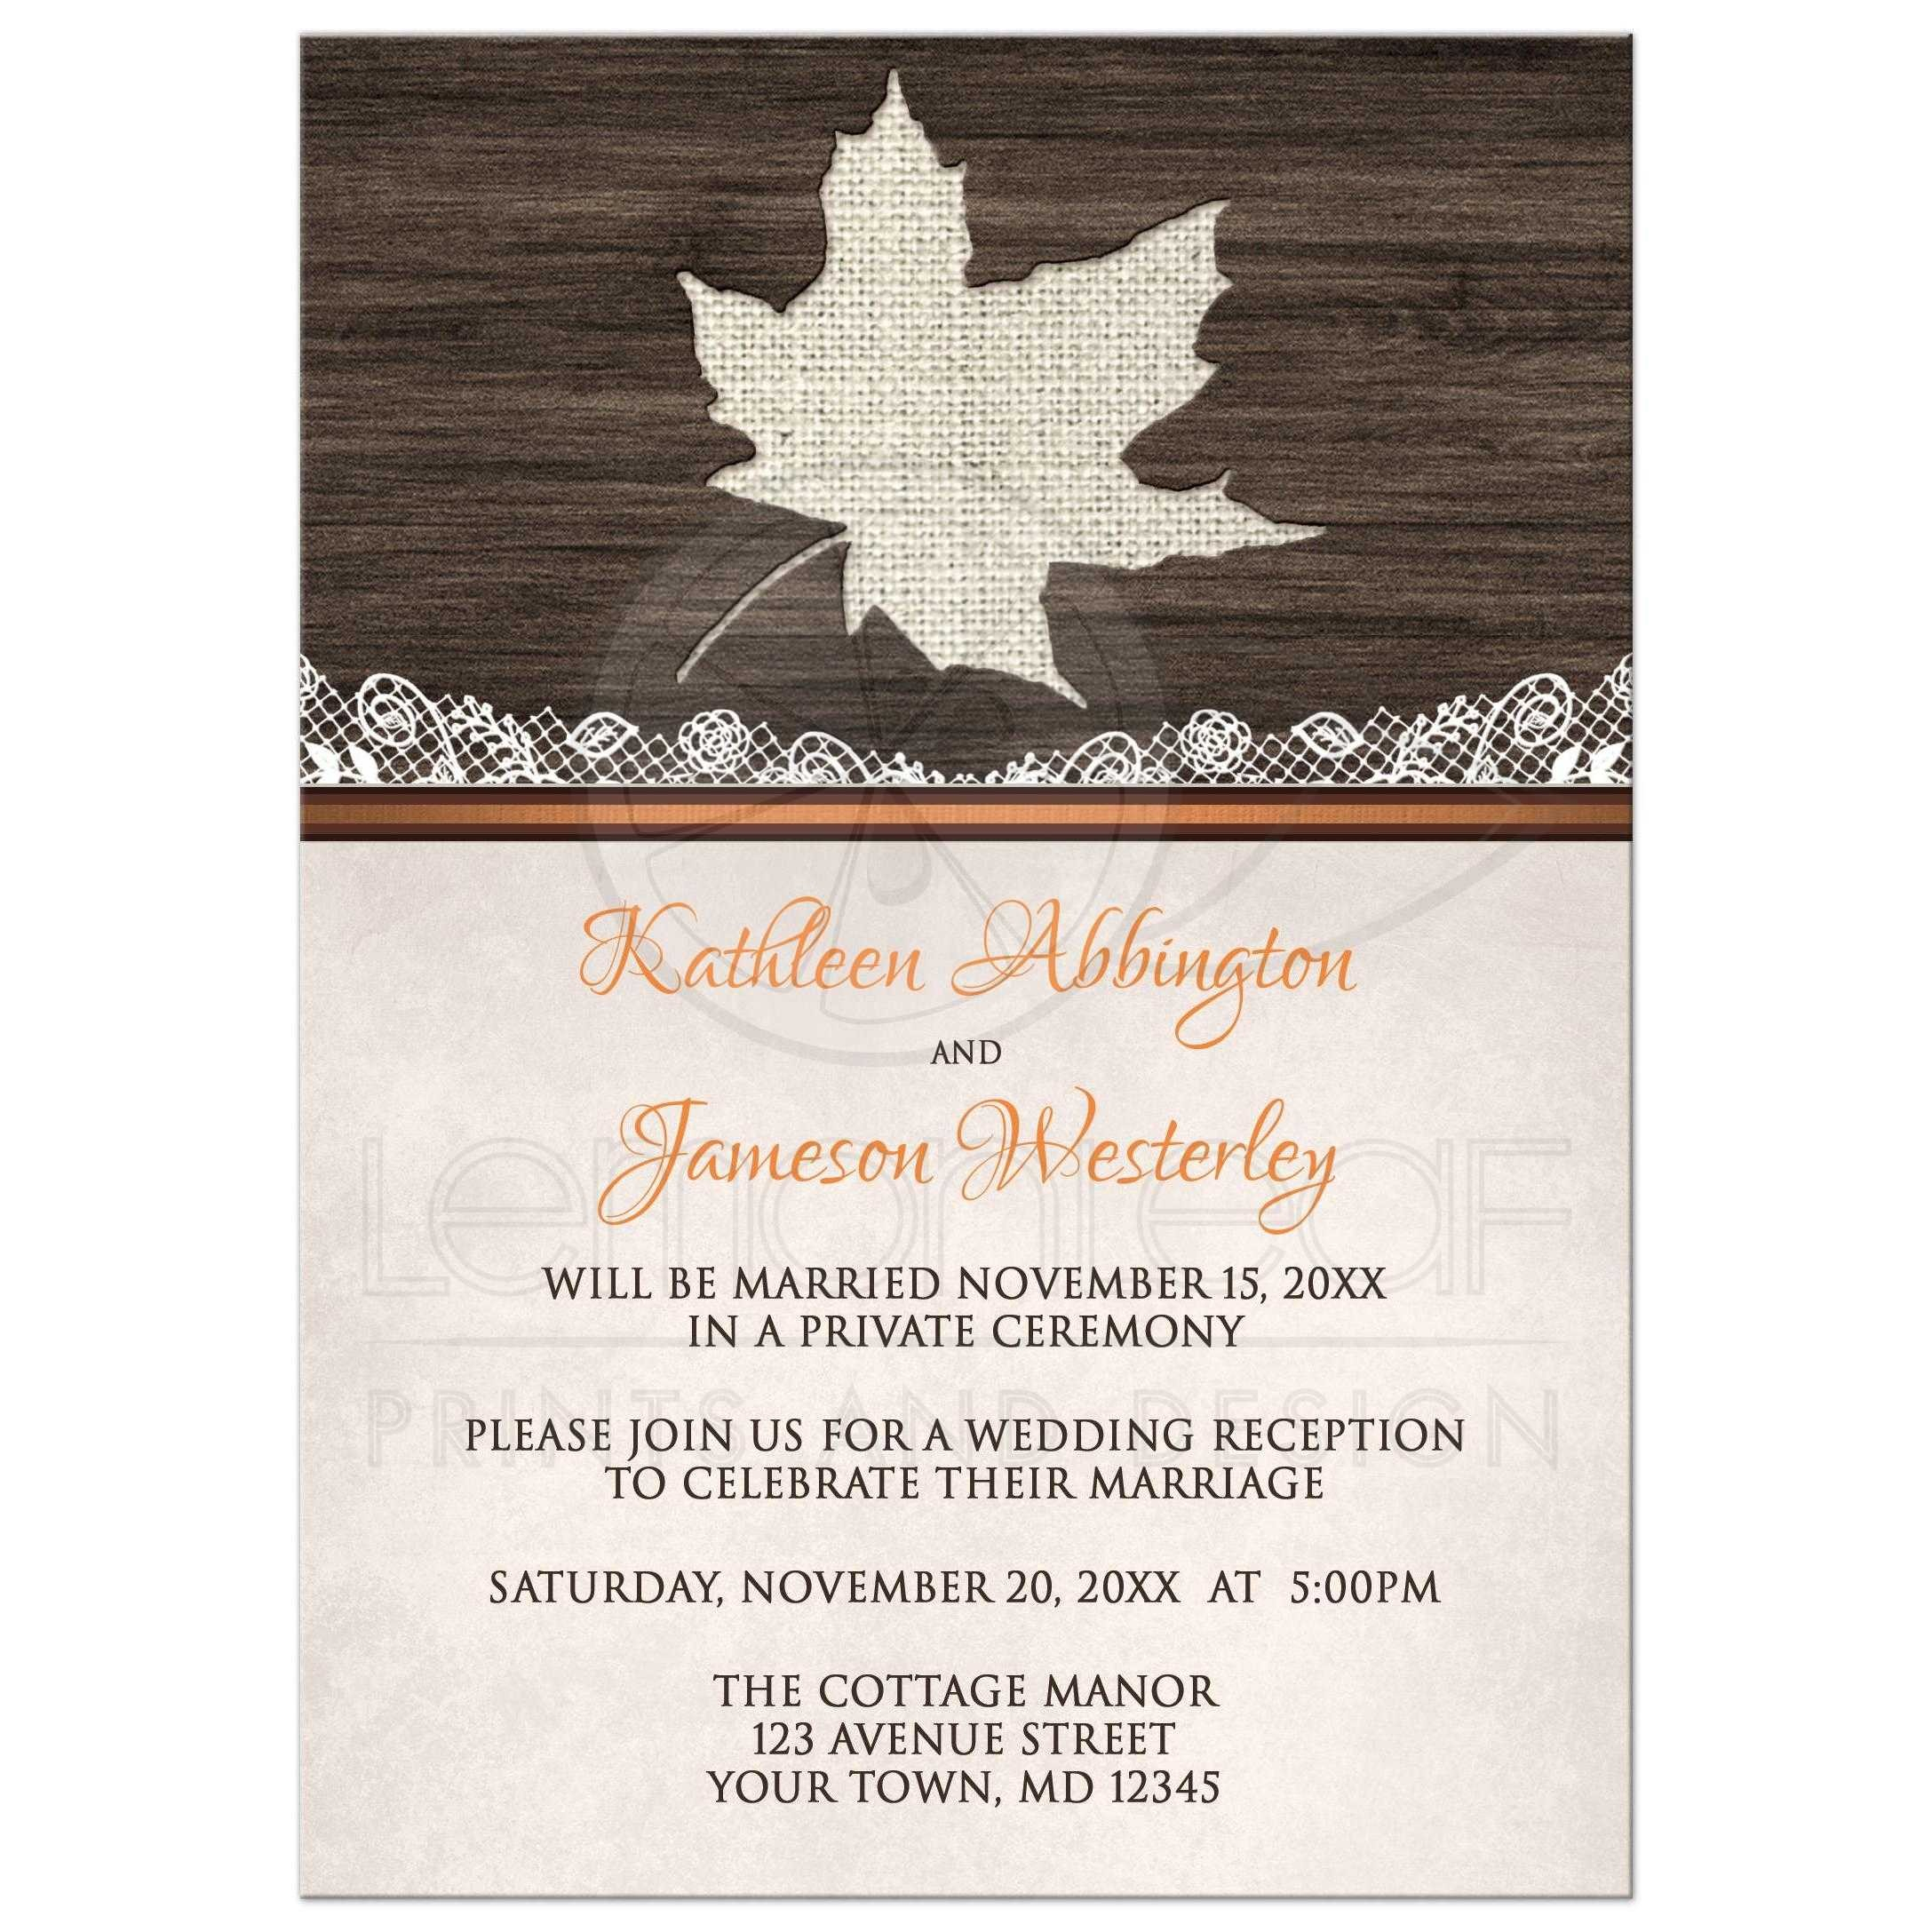 Reception Only Wedding Invitations Reception Only Wedding Invitation Wording Card Invitation Design